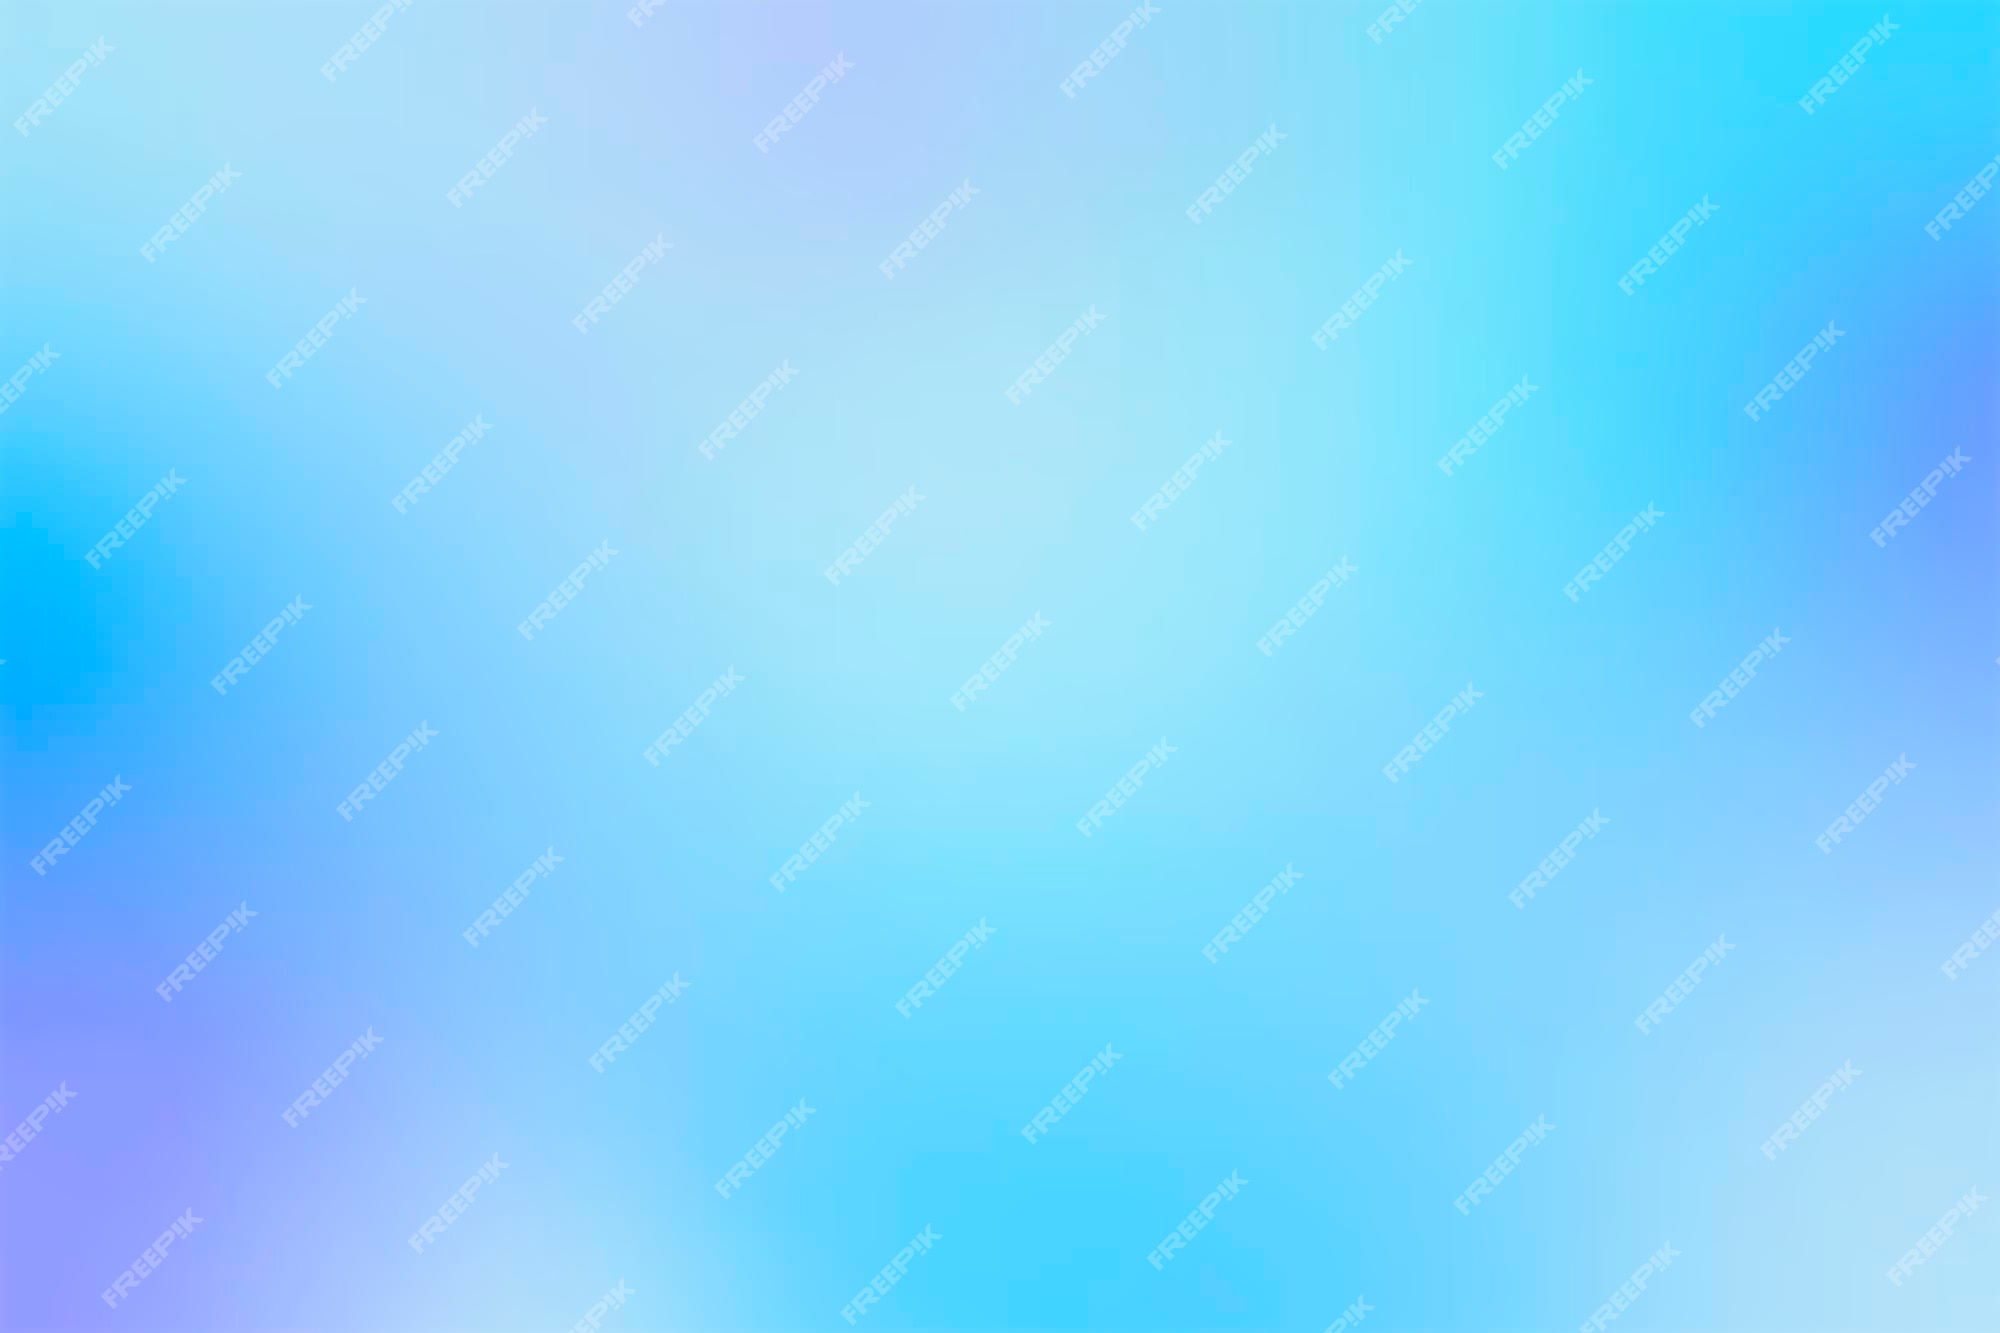 Blue Gradient Background Images - Free Download on Freepik